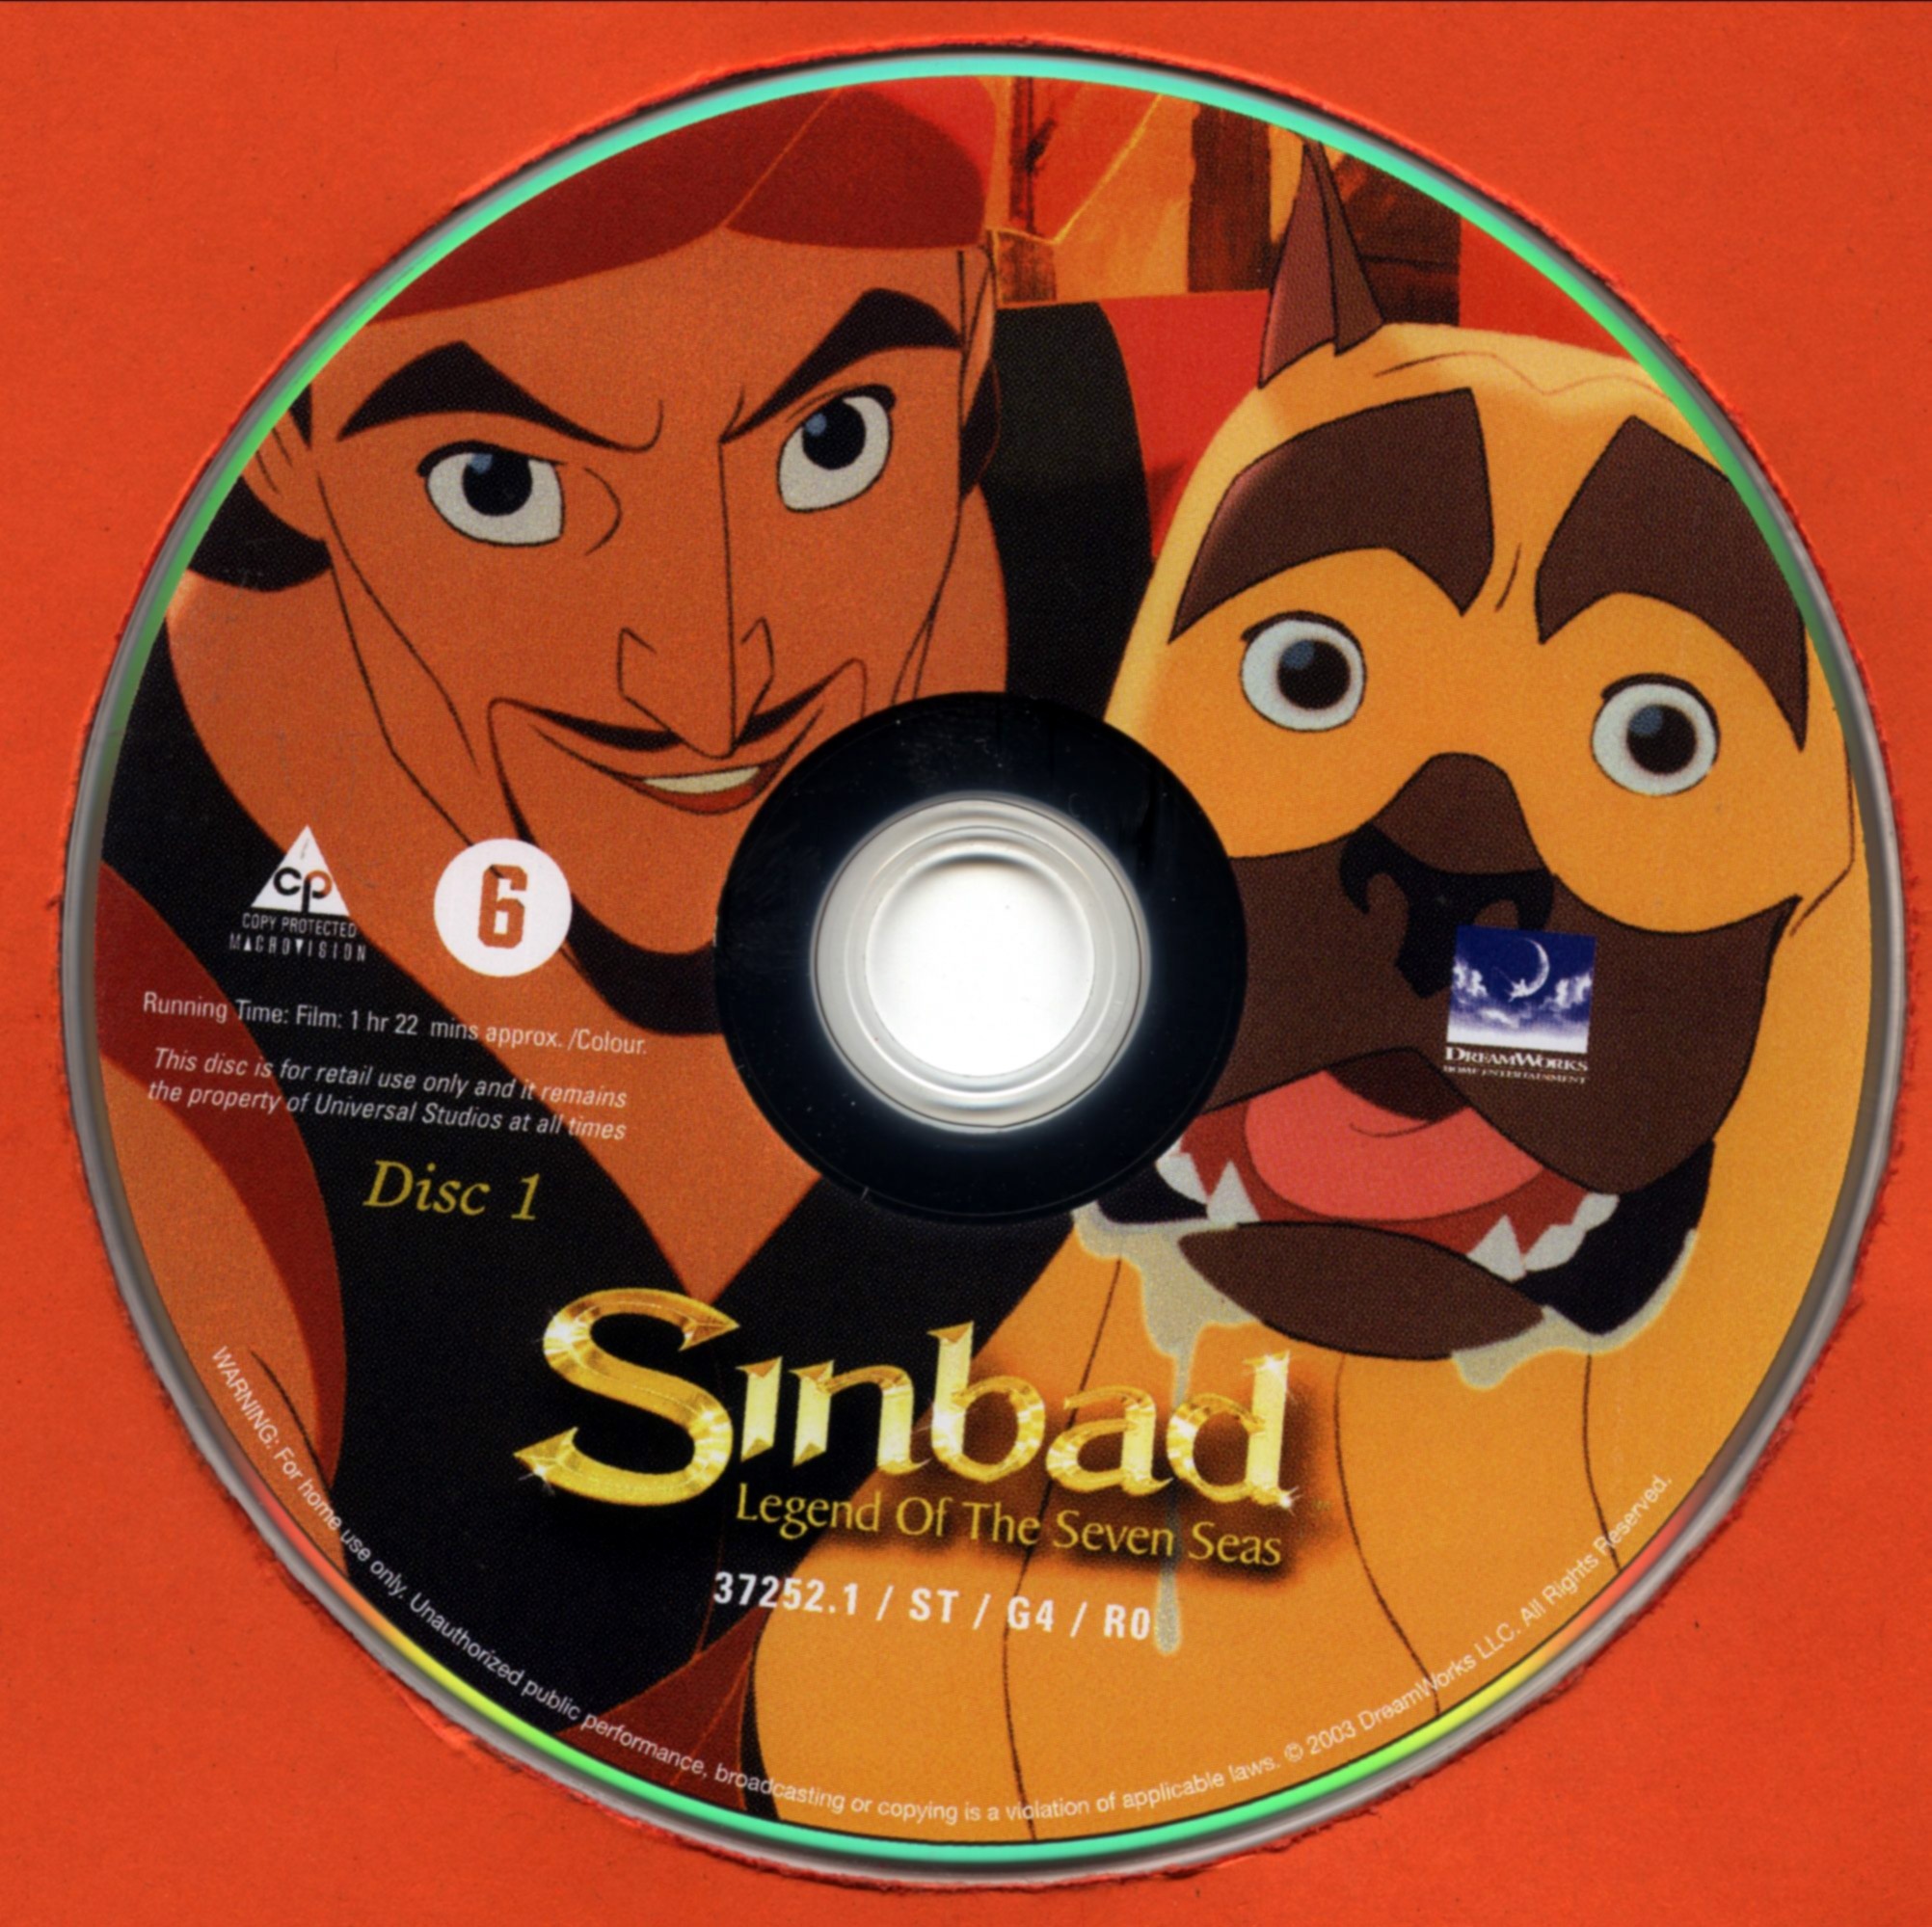 Sinbad la legende des 7 mers DISC 1